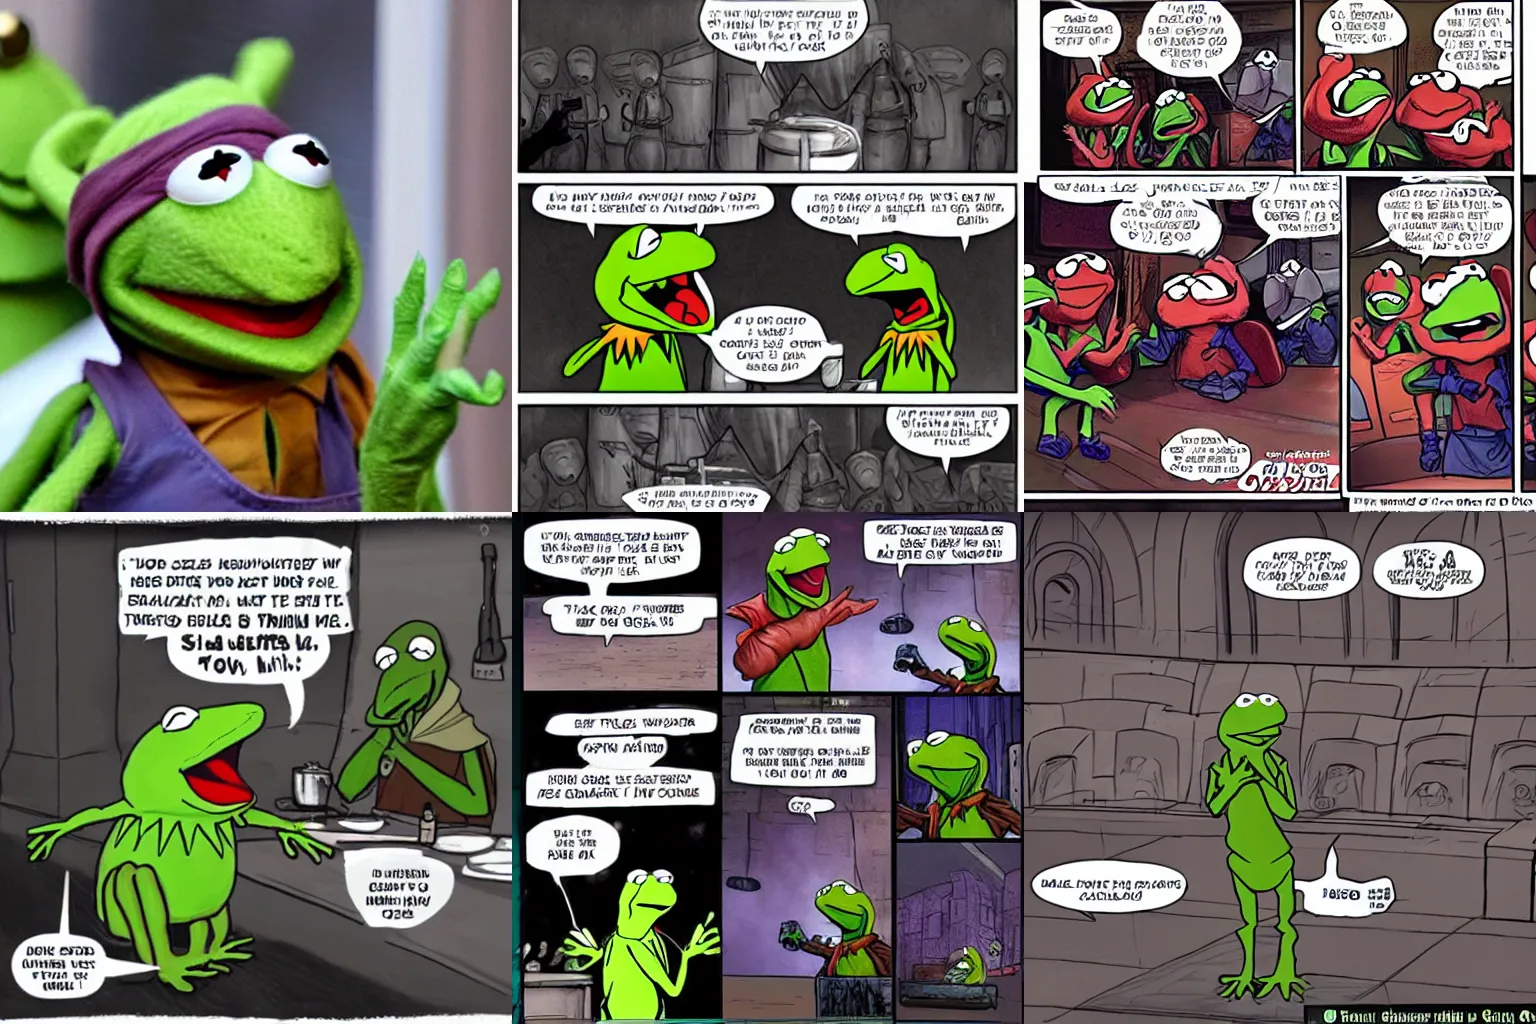 Prompt: Kermit executes order 66